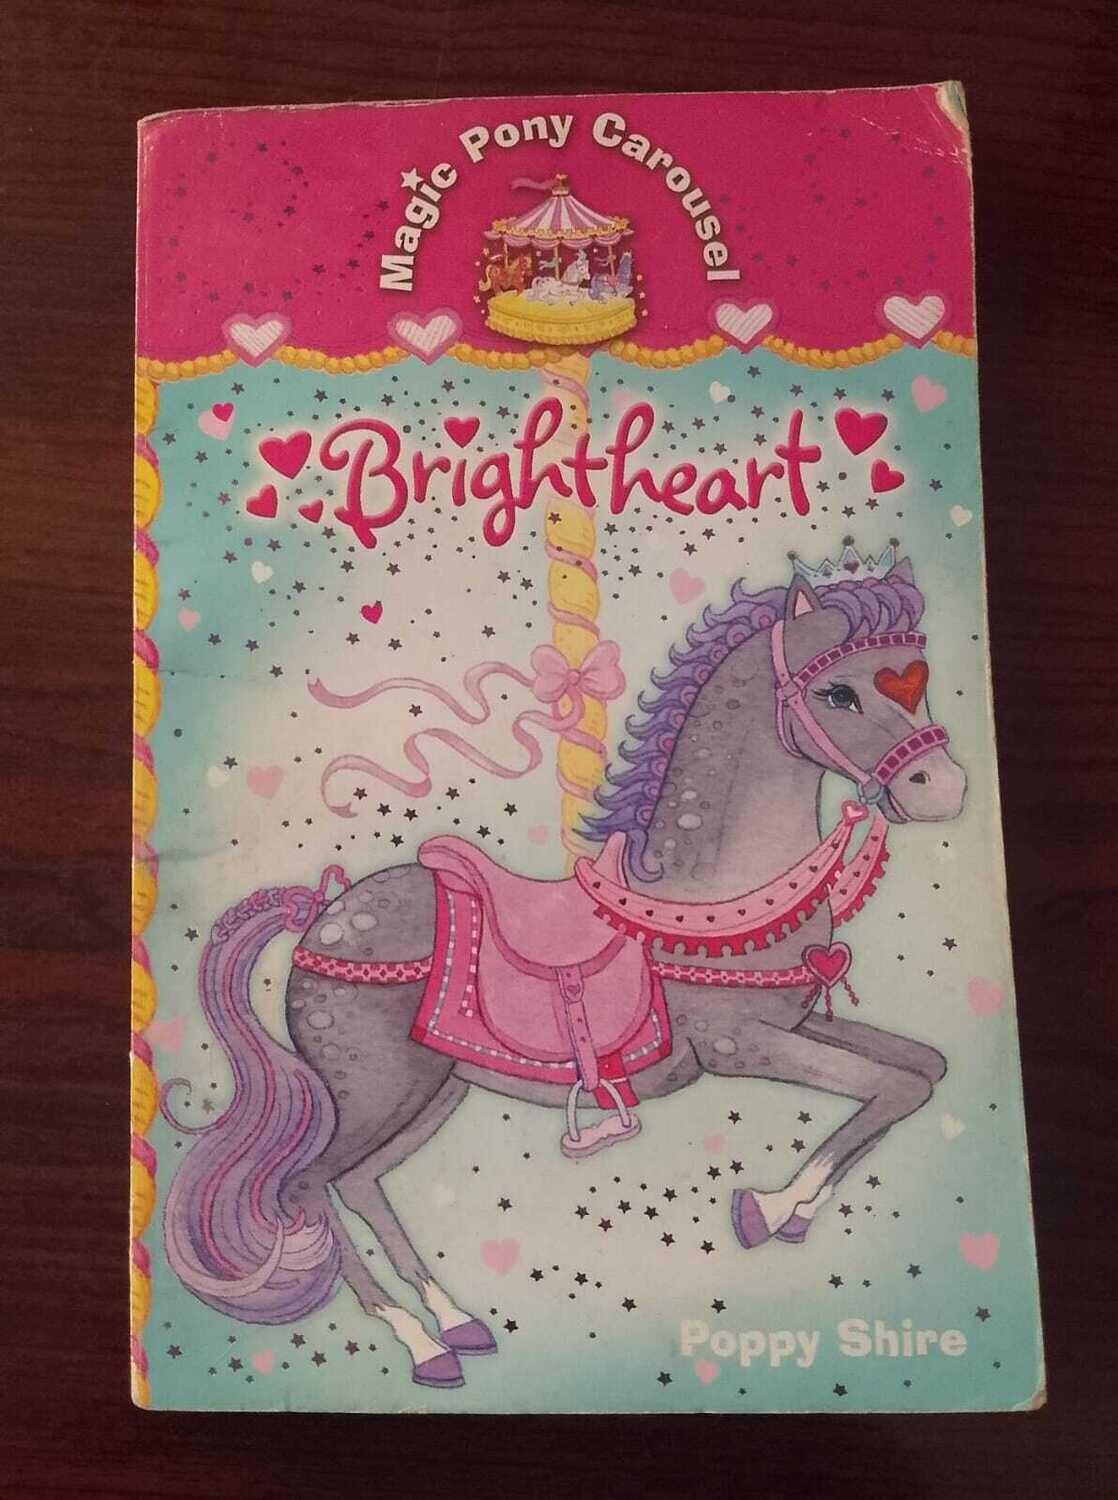 Magic pony carousel brightheart